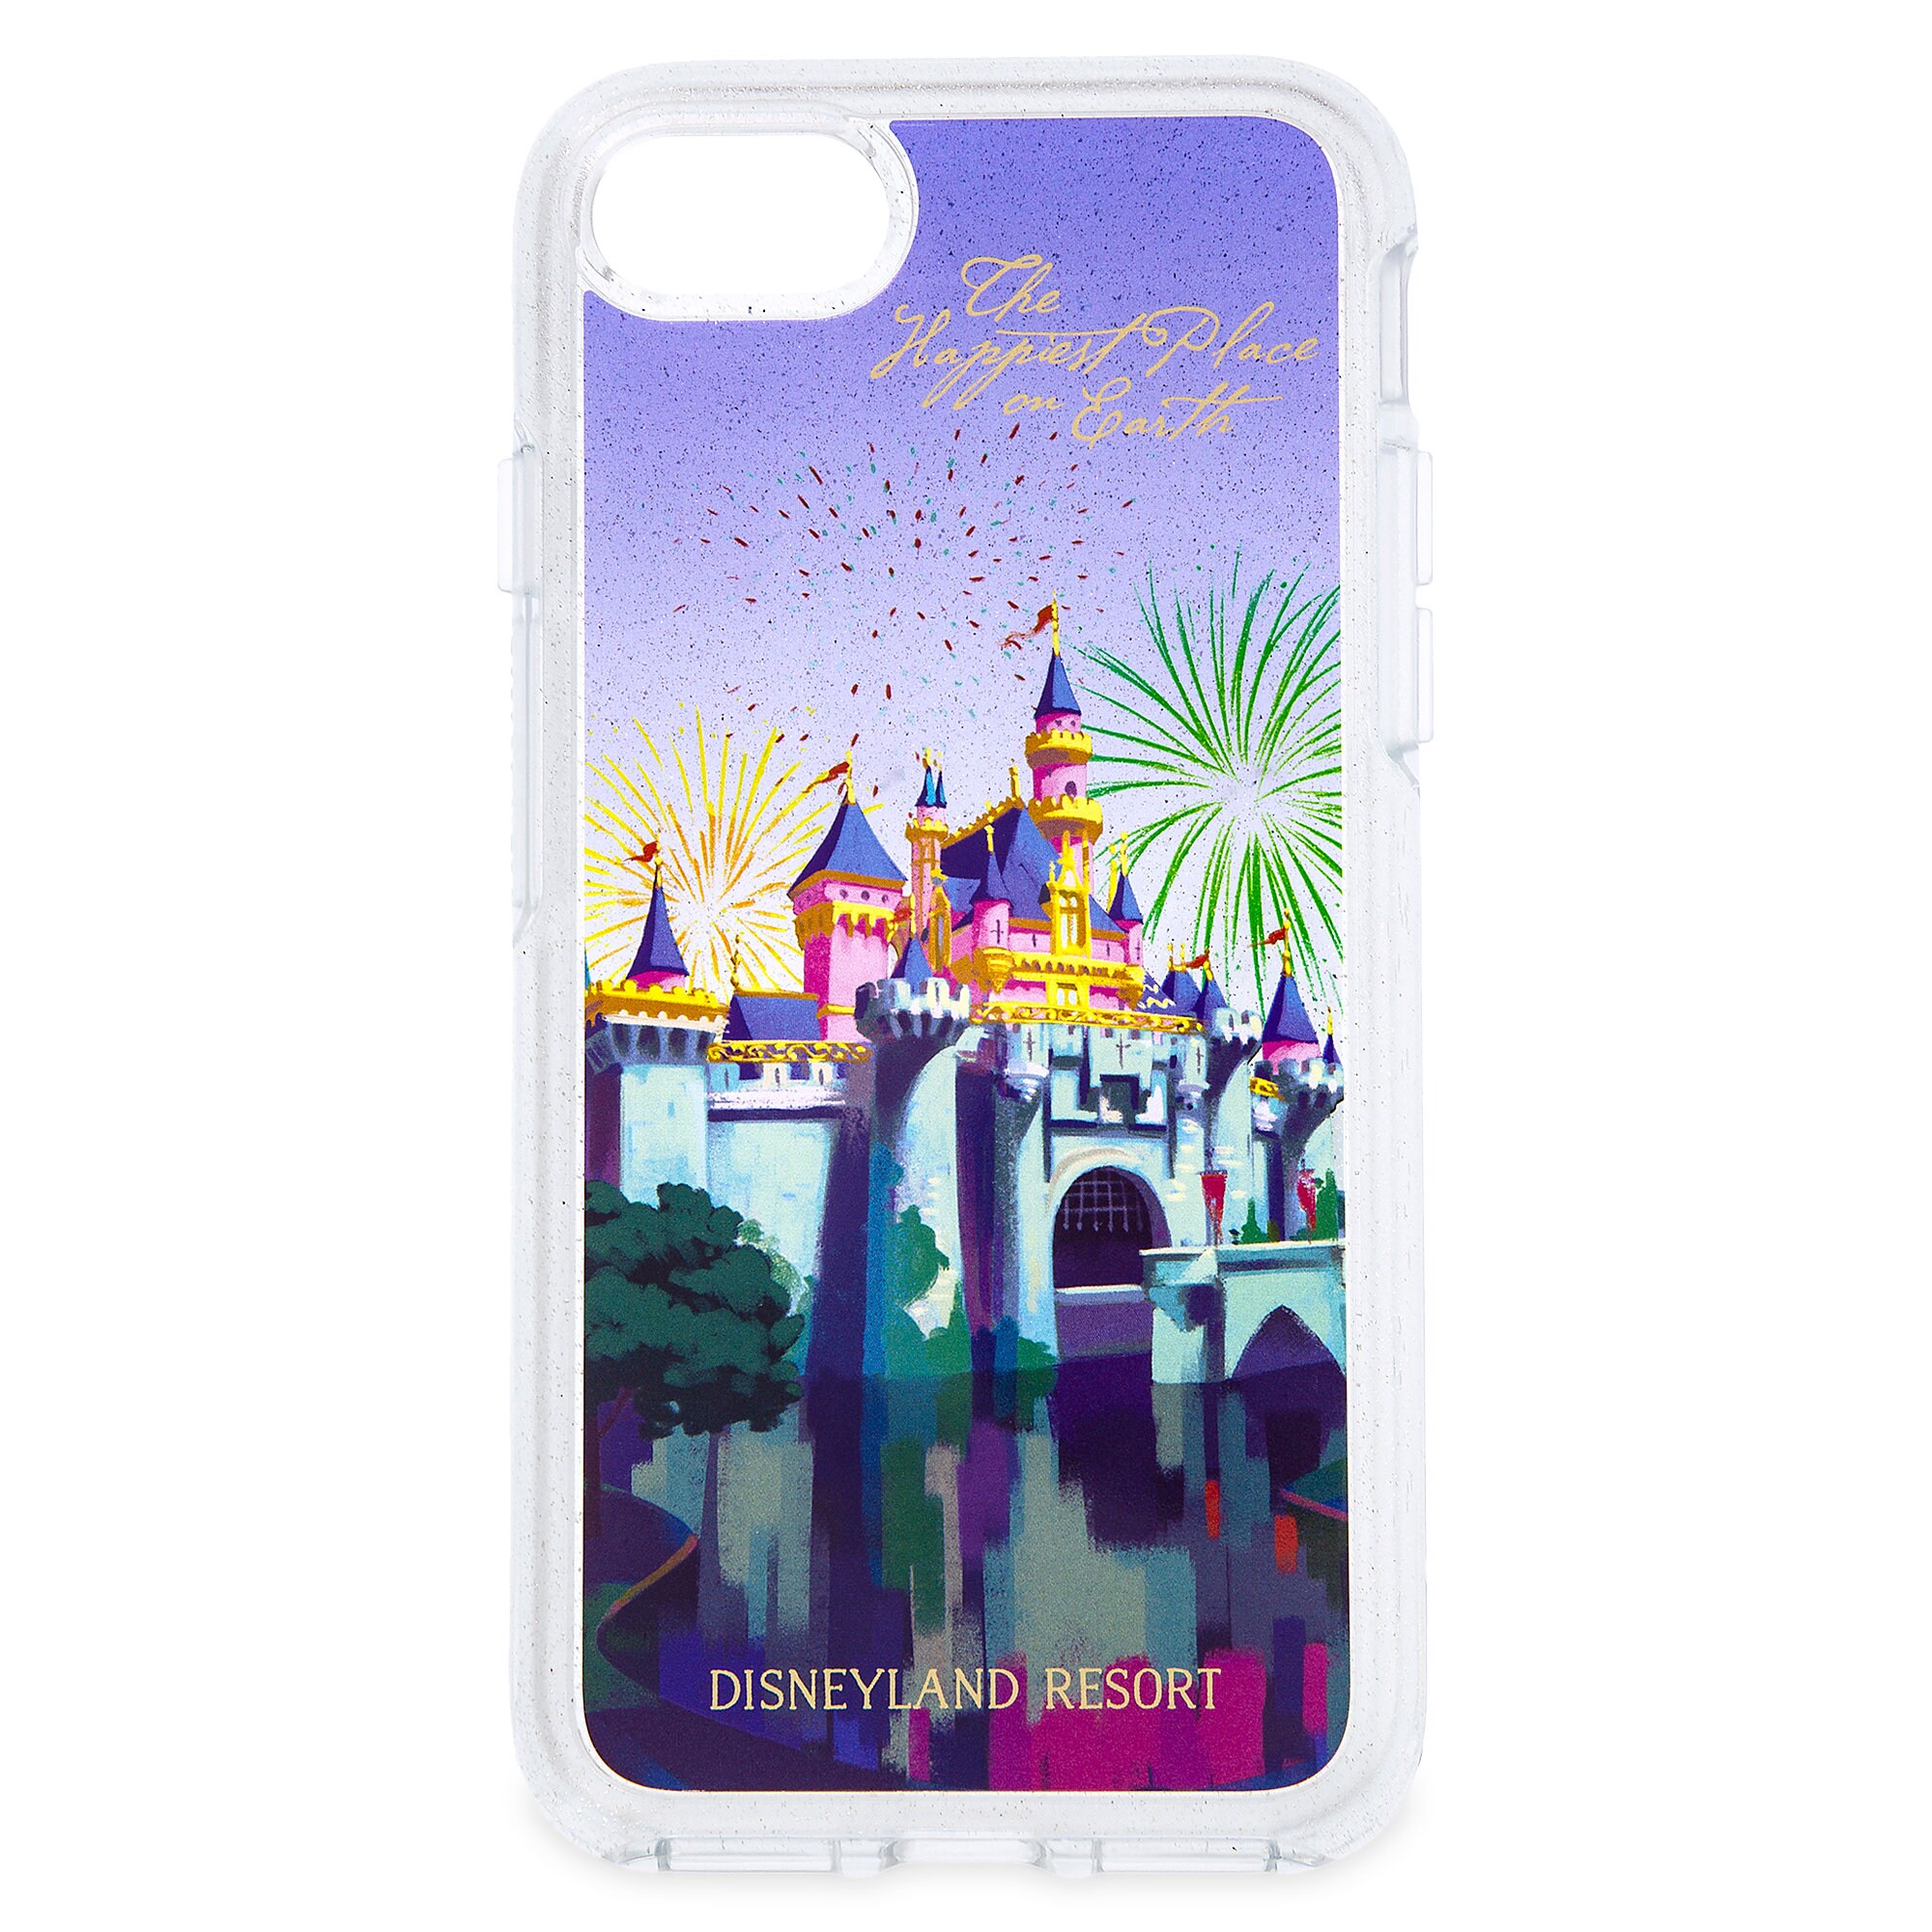 Sleeping Beauty Castle iPhone 8/7 Case by OtterBox - Disneyland